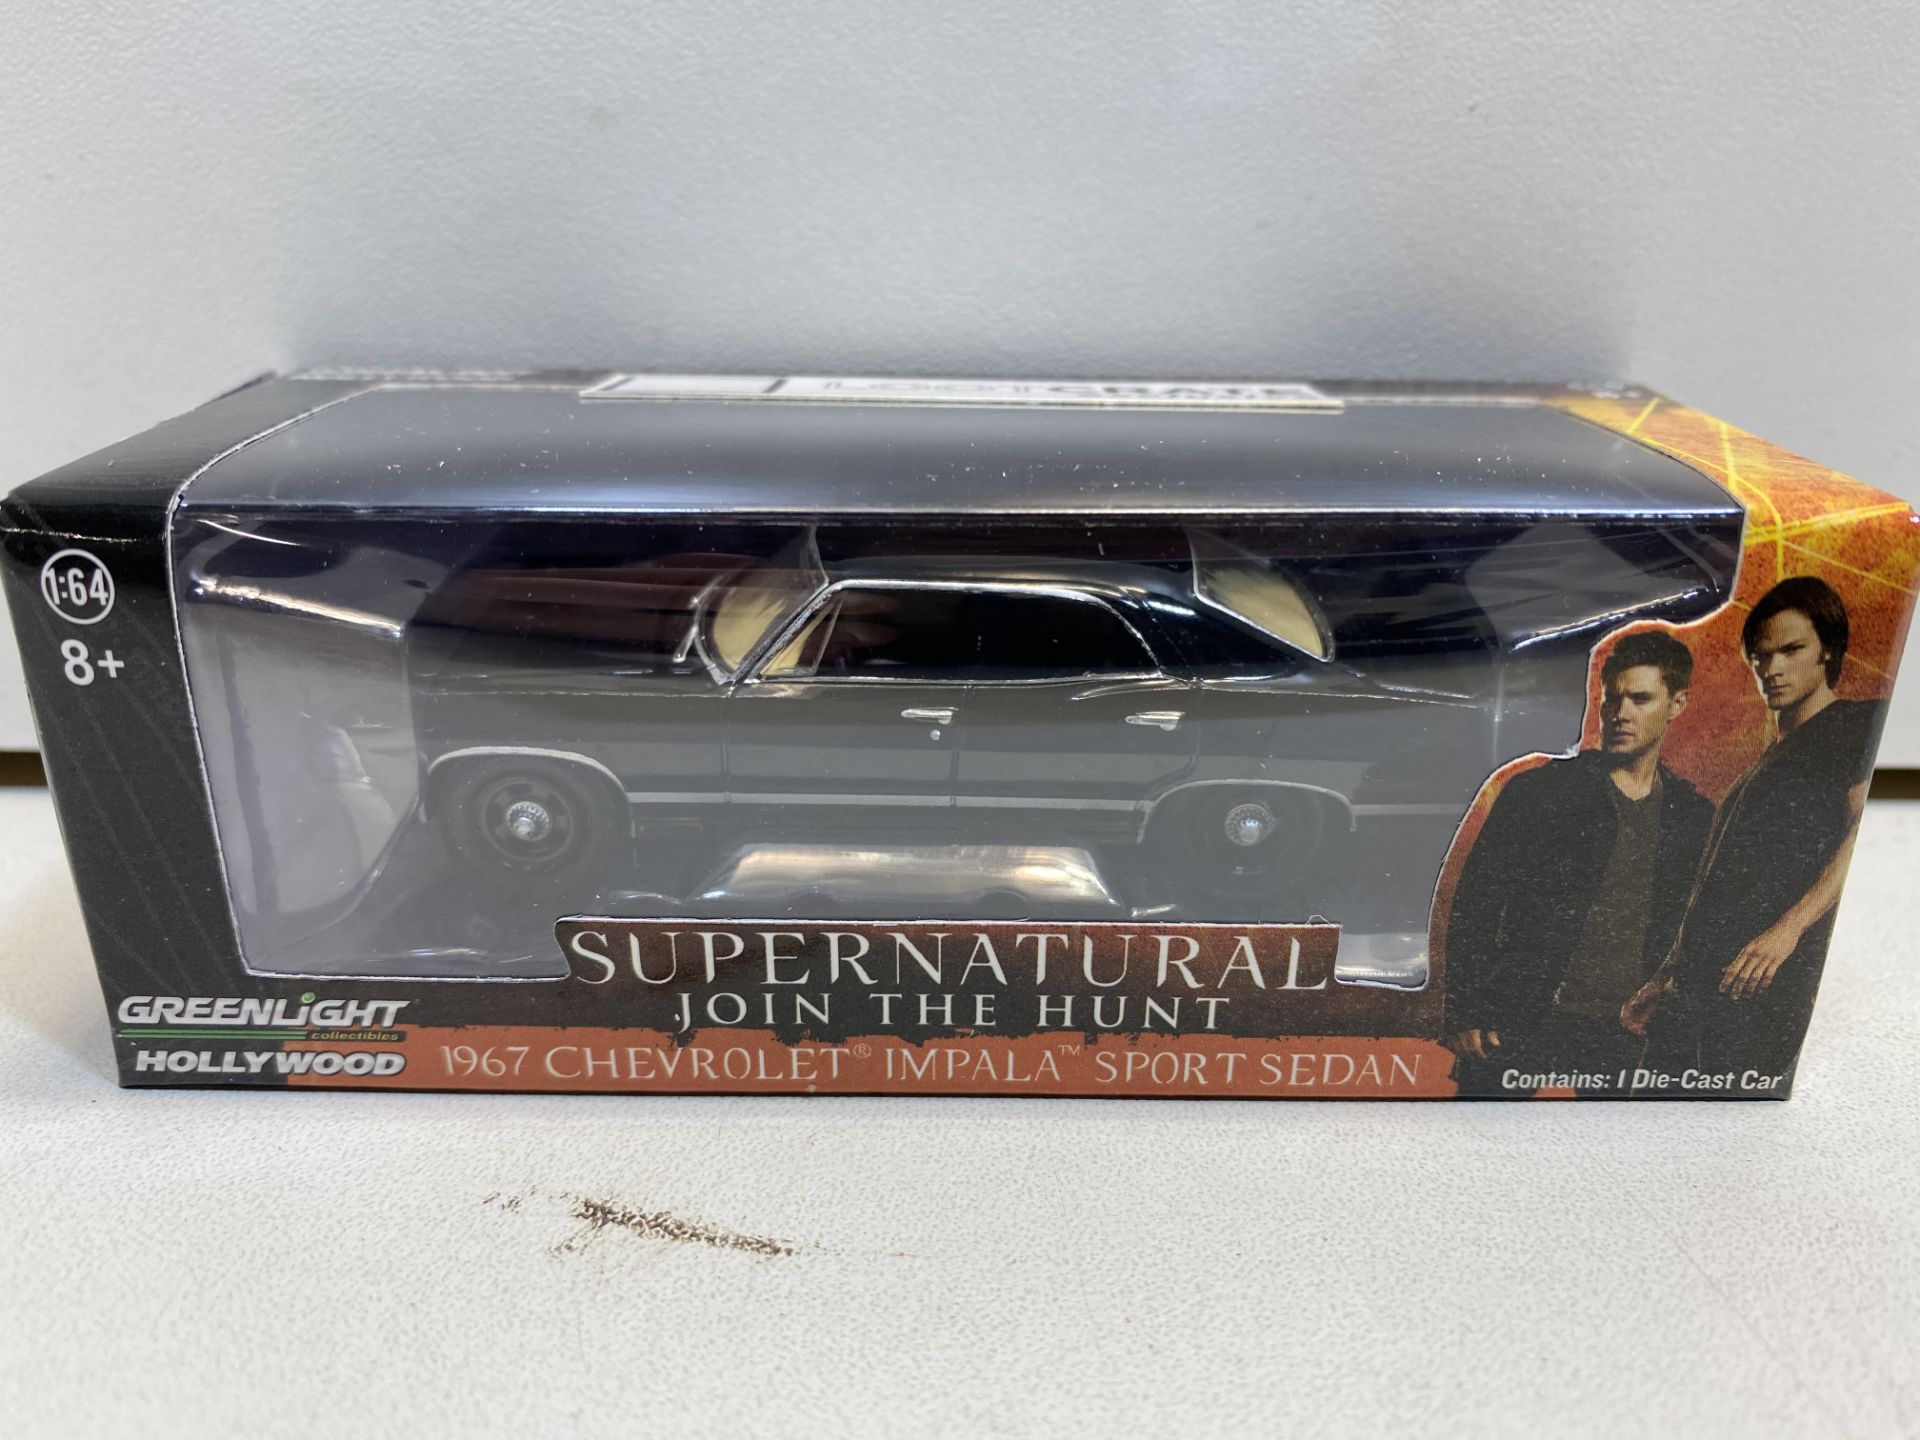 25 x Chevrolet Impala - Supernatural - Loot Crate Exclusive